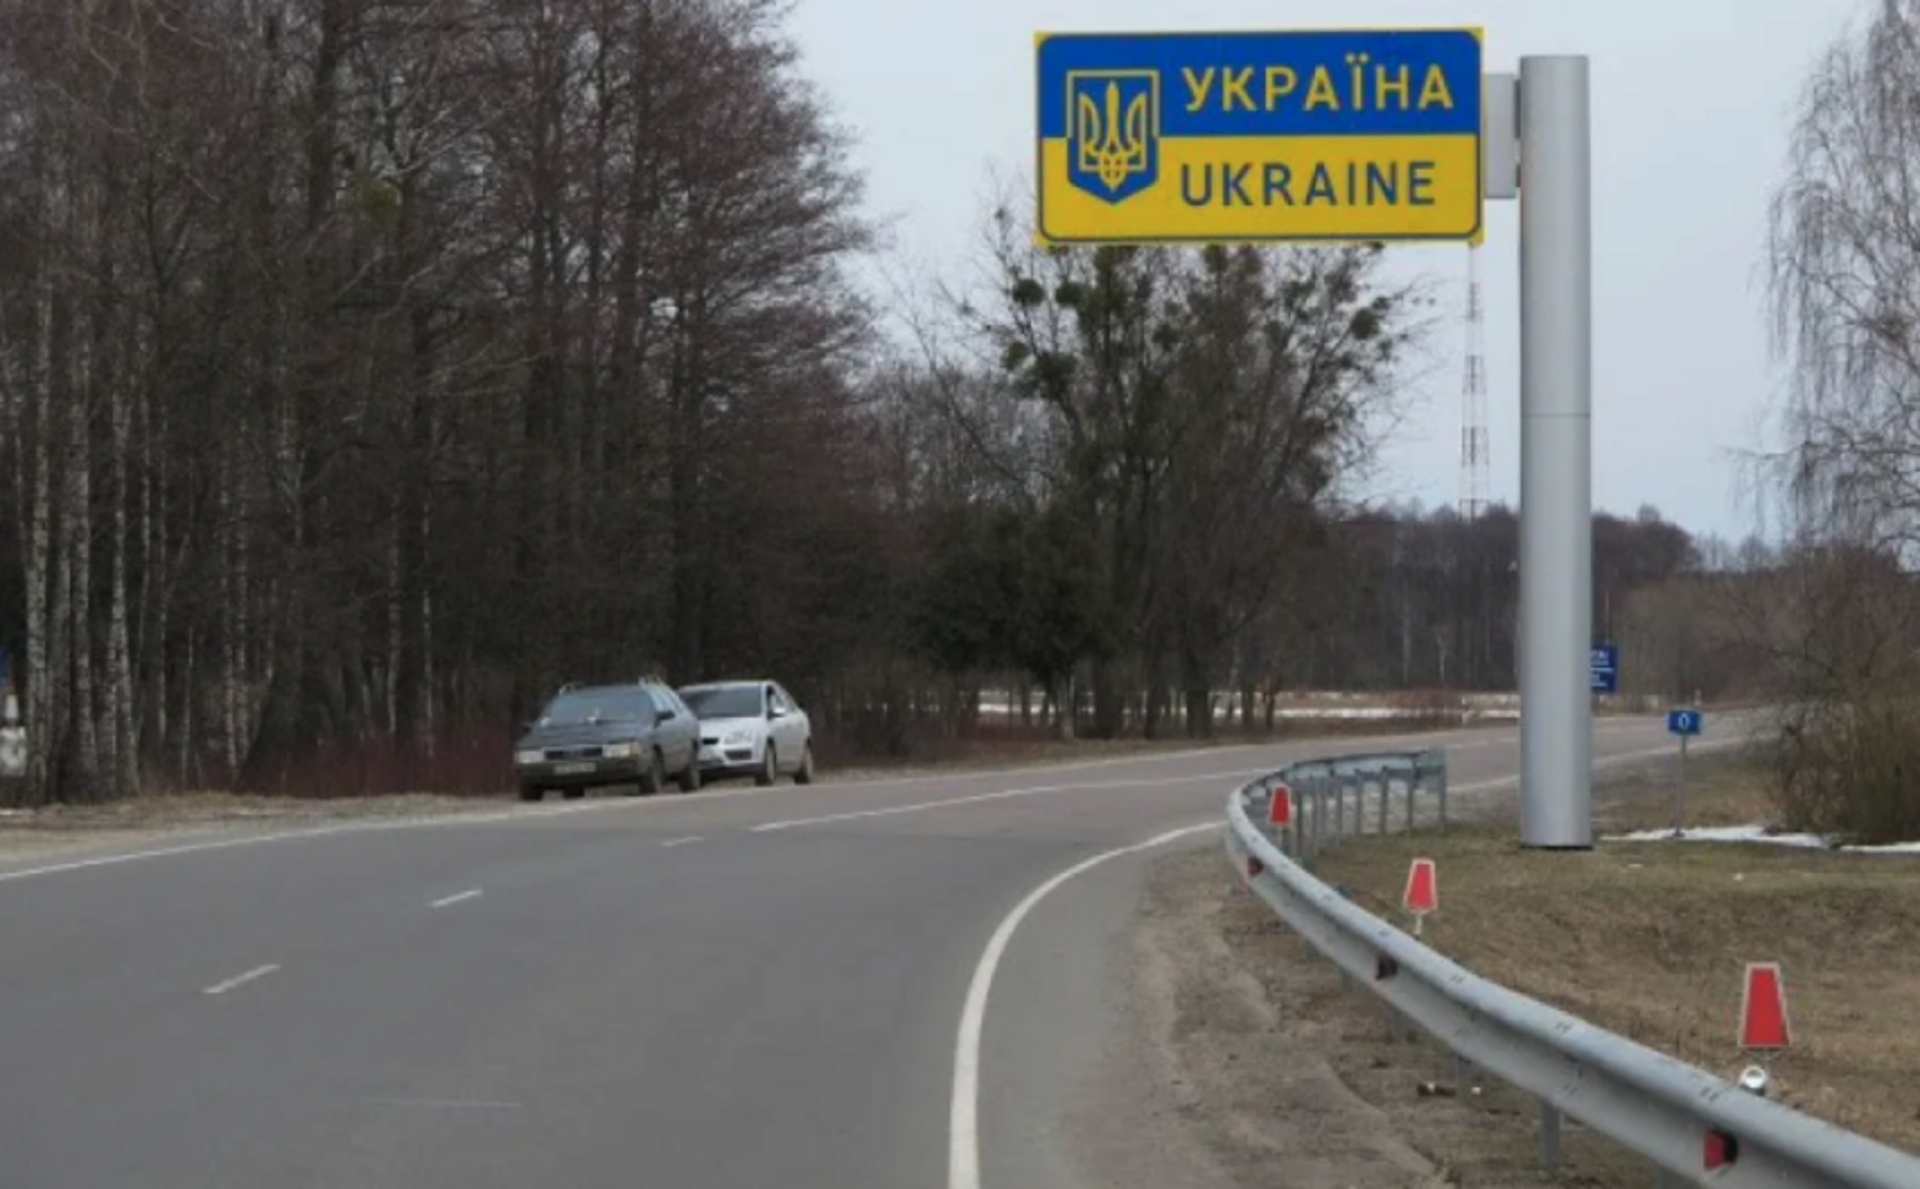 Украина переход граница